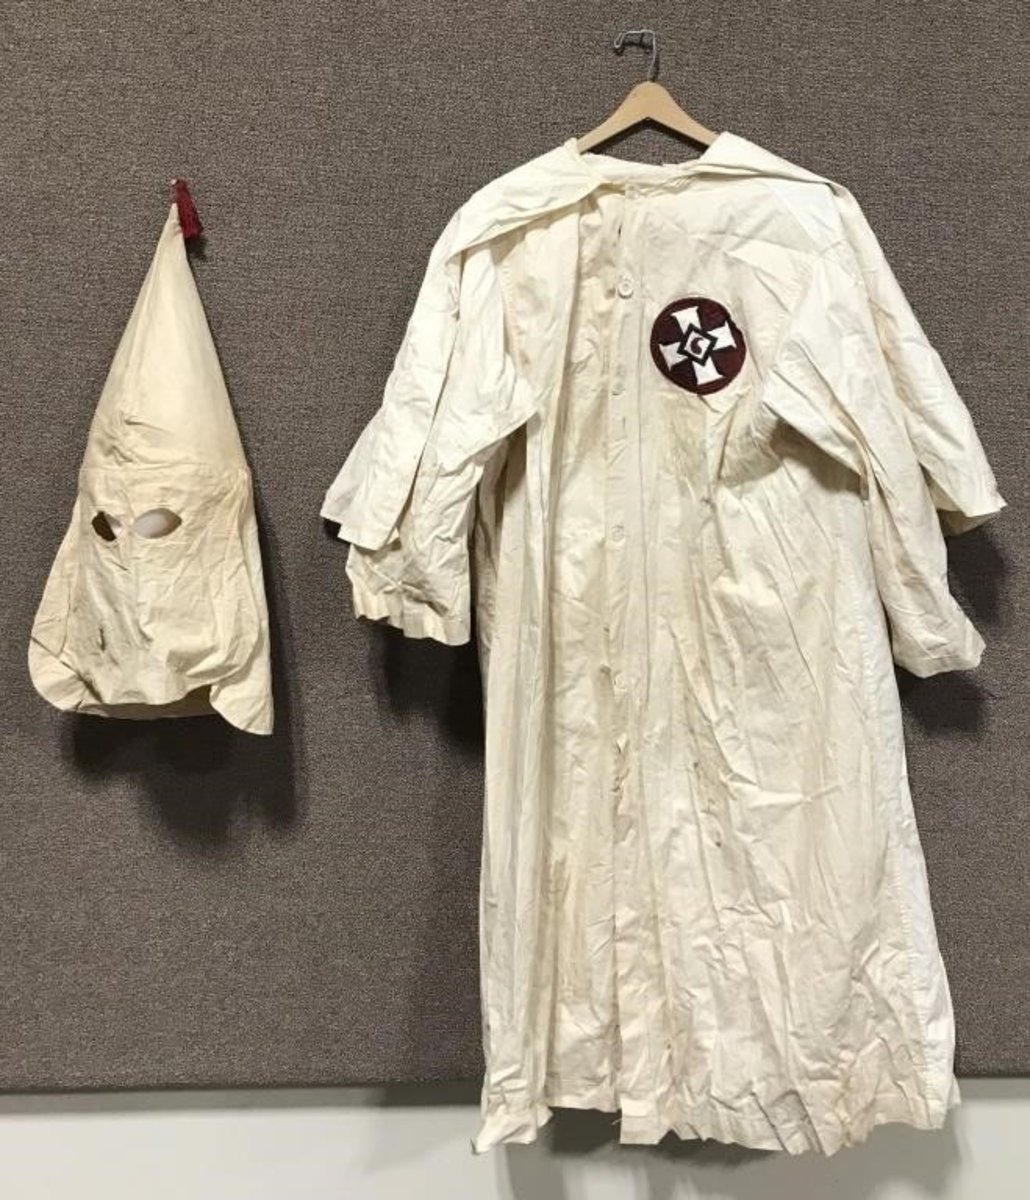 KKK hood and robe.